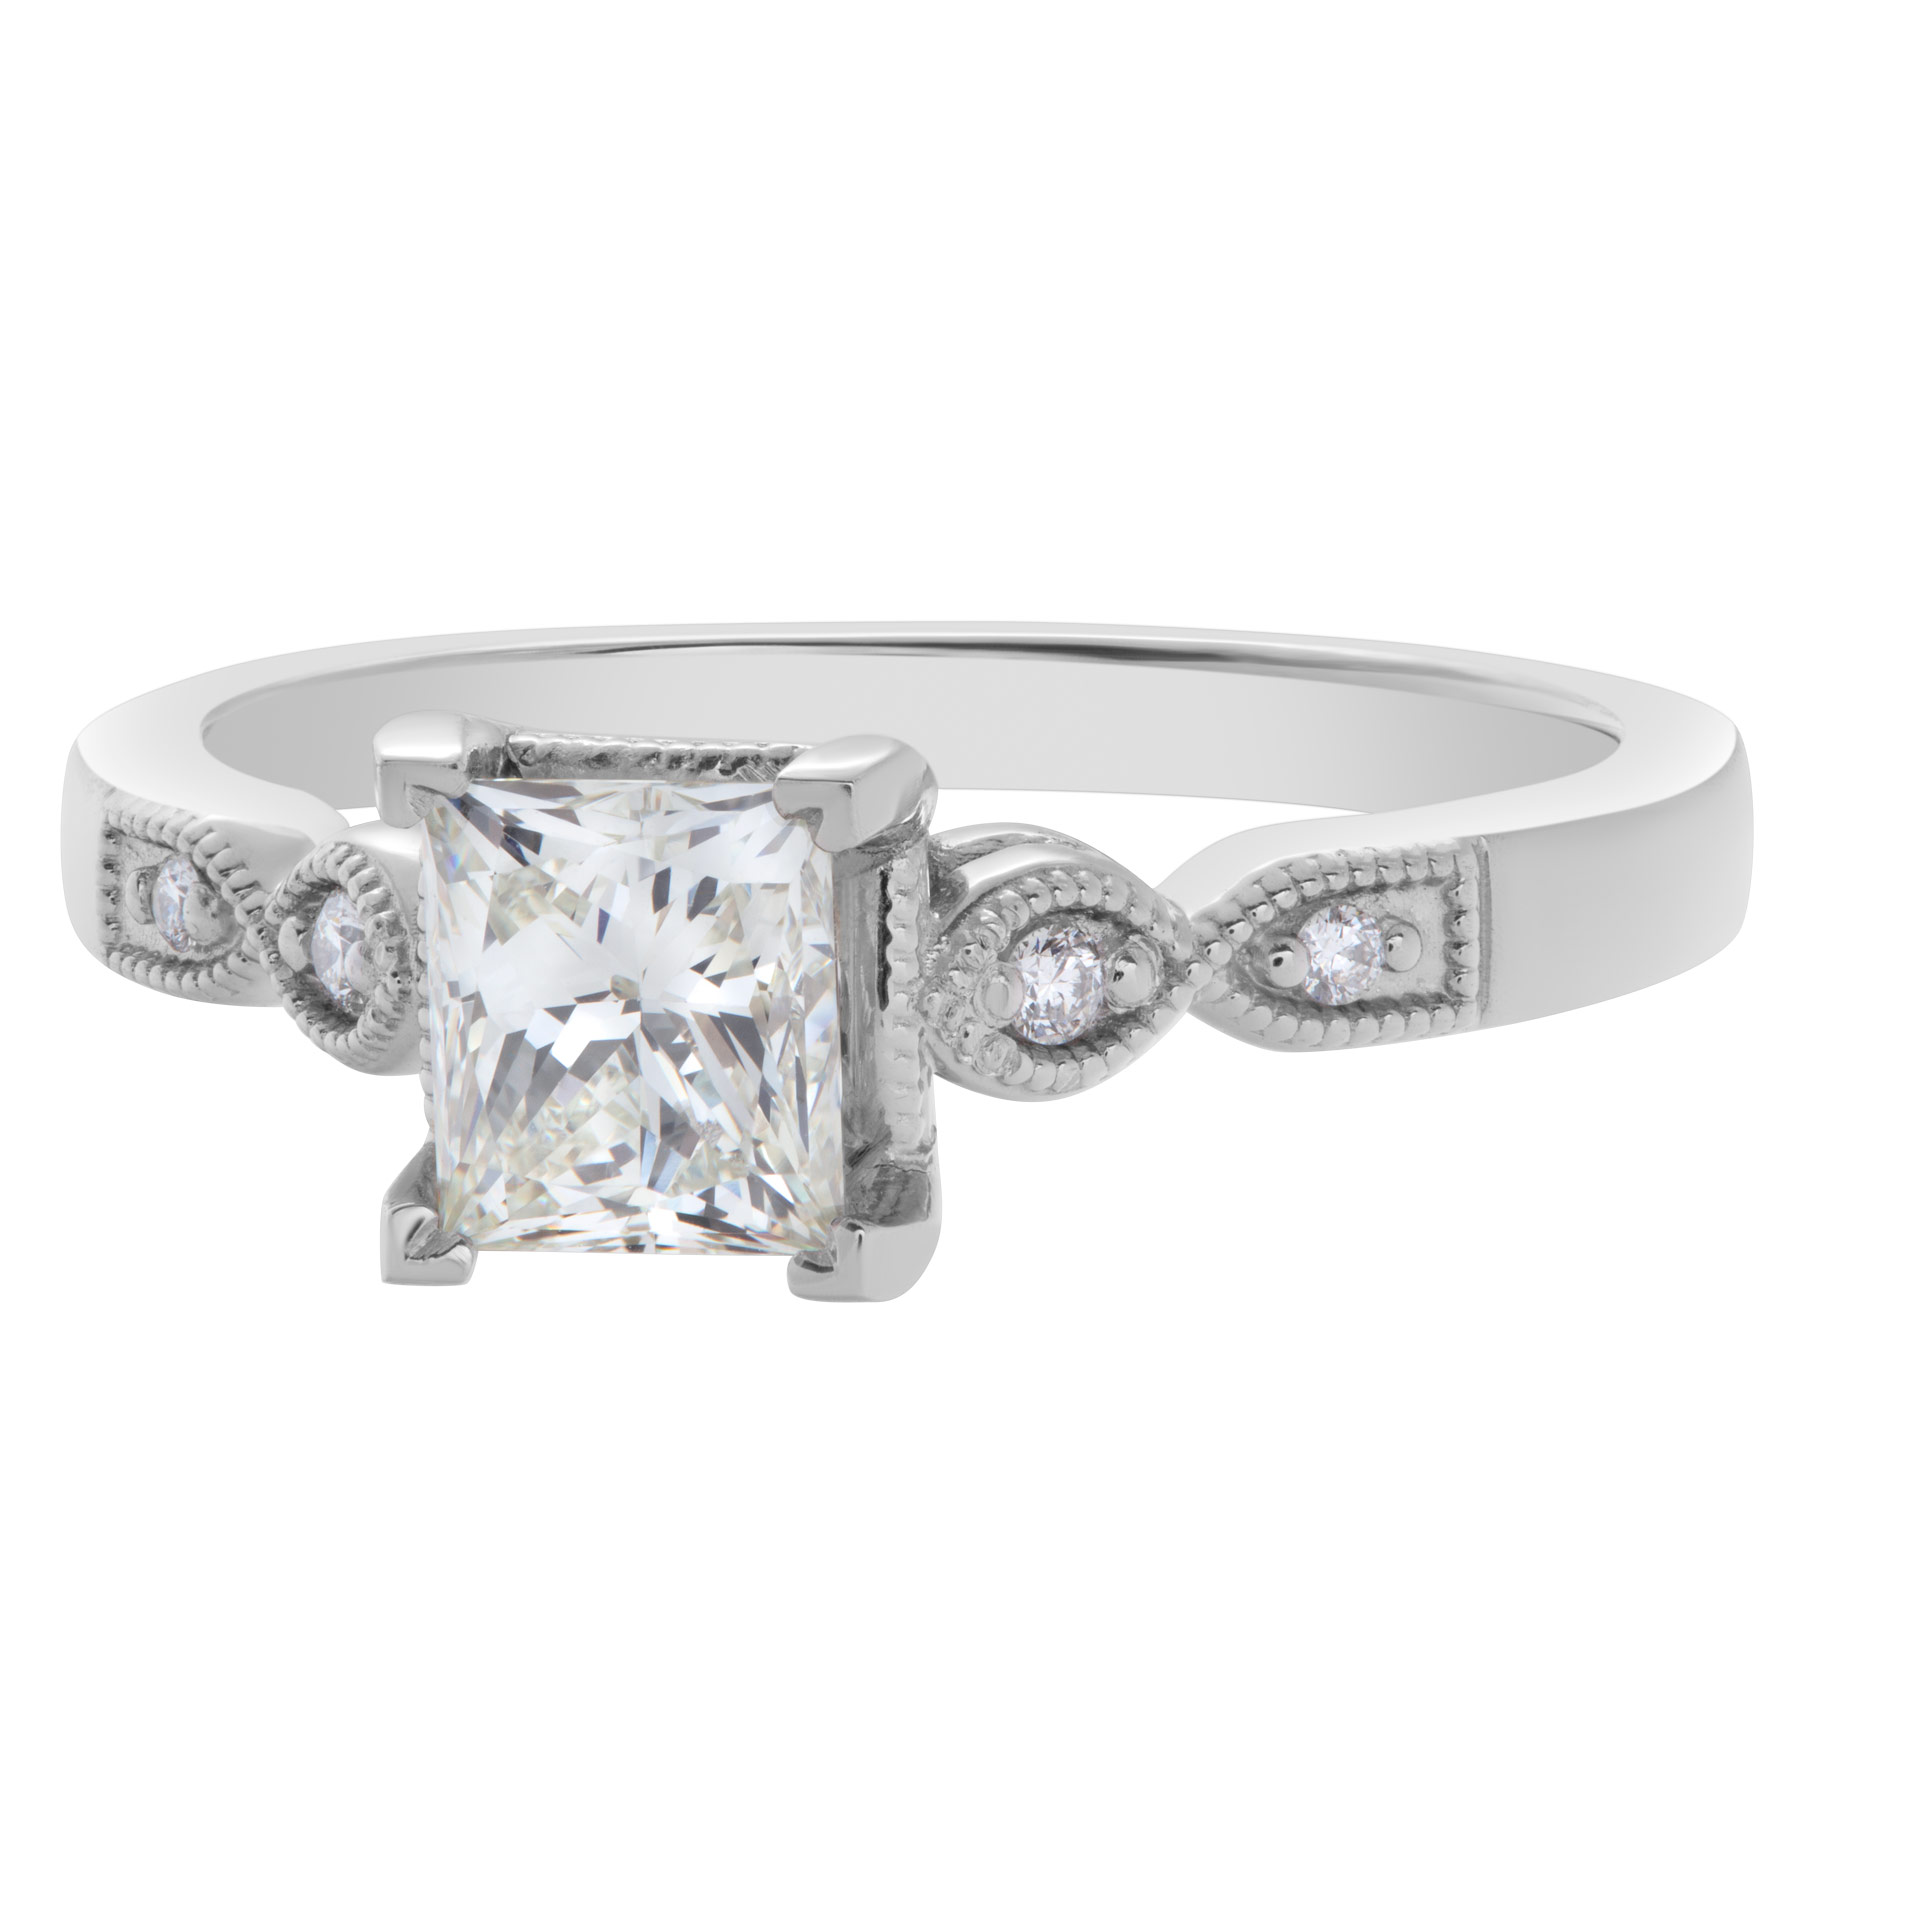 GIA certified rectangular modified brilliant cut diamond 1.03 carat (L color, VVS2 clarity) ring image 3